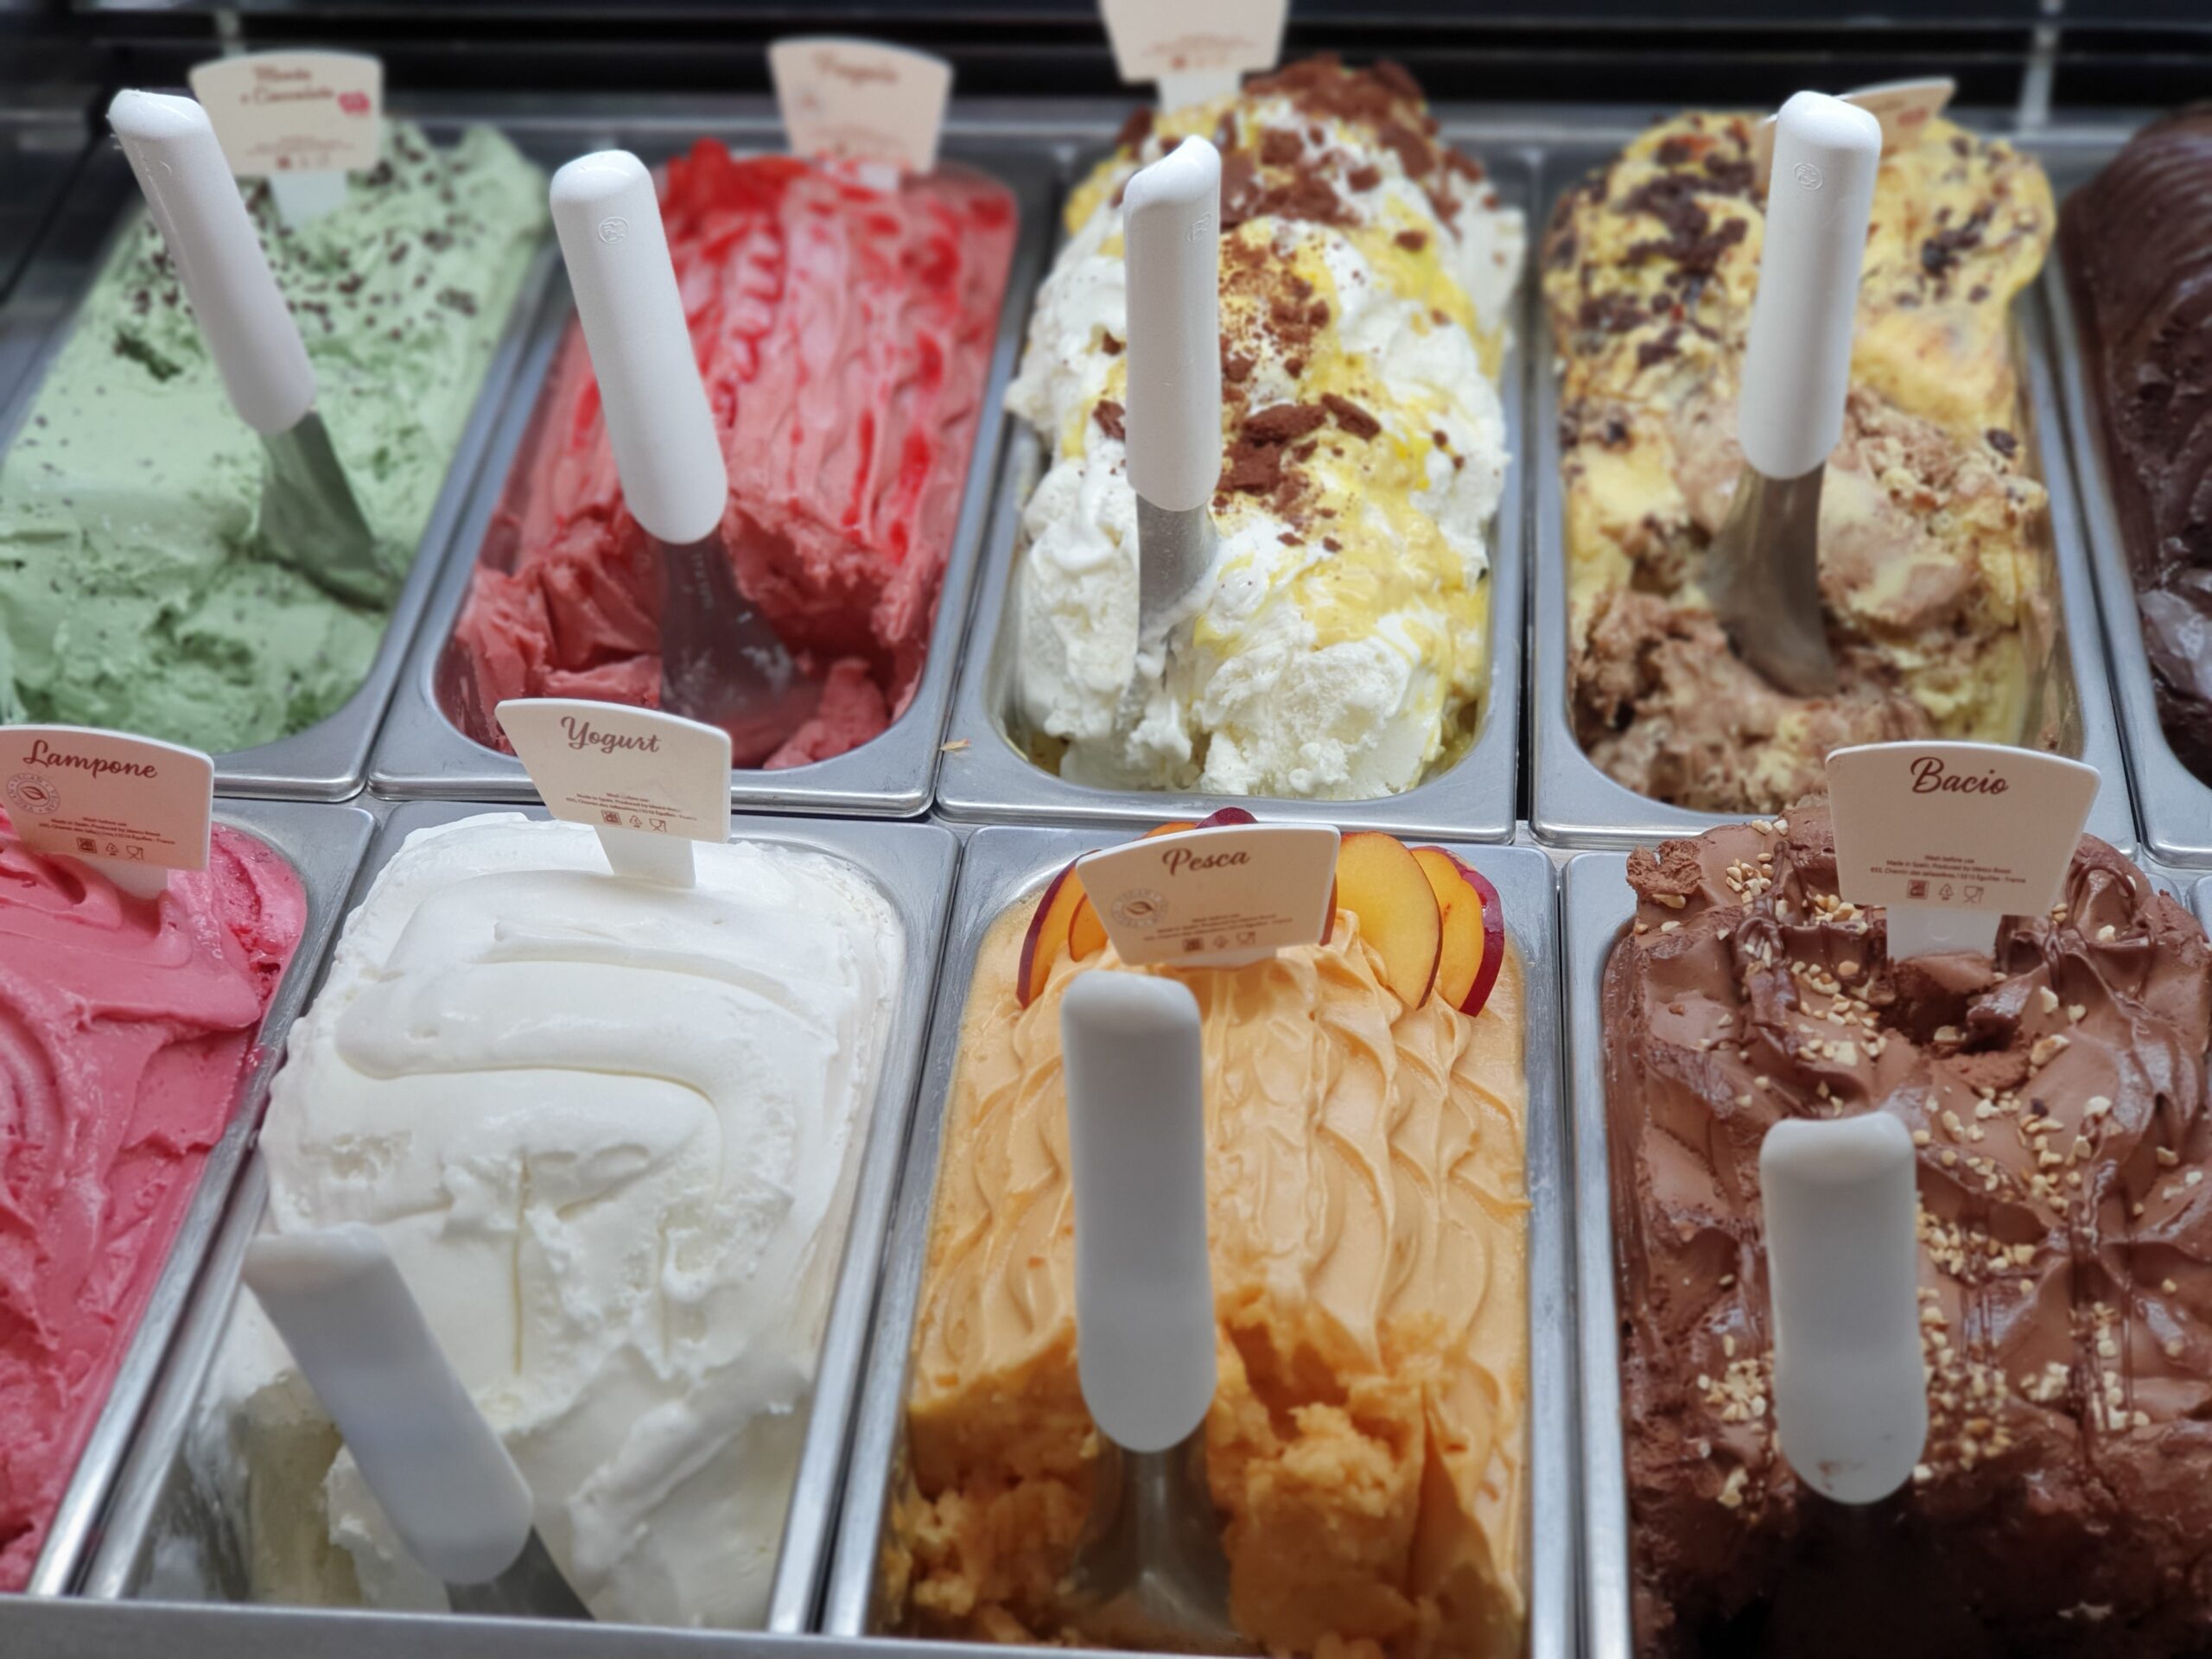 Eight flavors of gelato